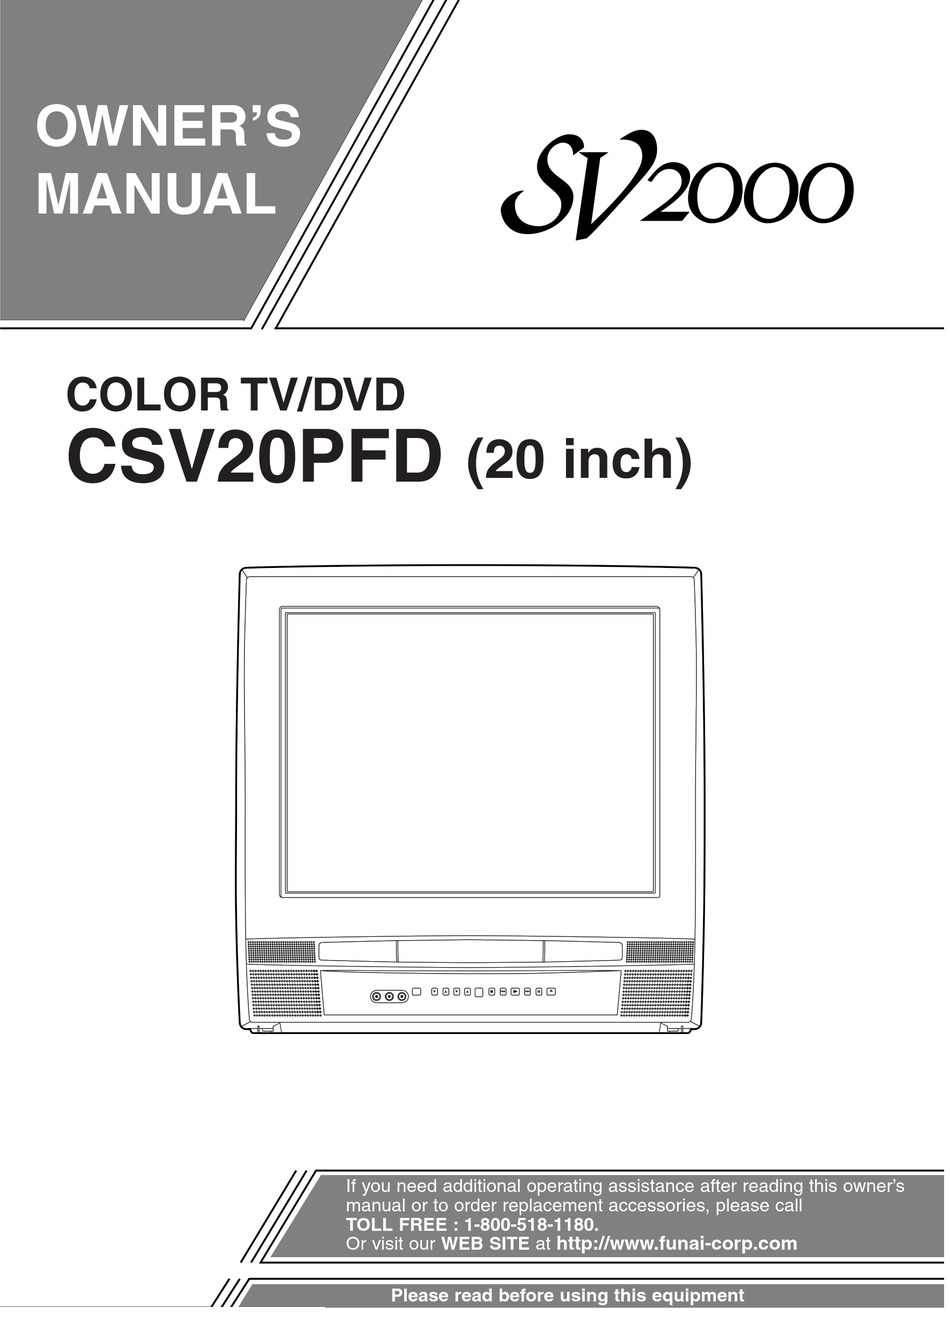 SV2000 CSV20PFD OWNER'S MANUAL Pdf Download | ManualsLib